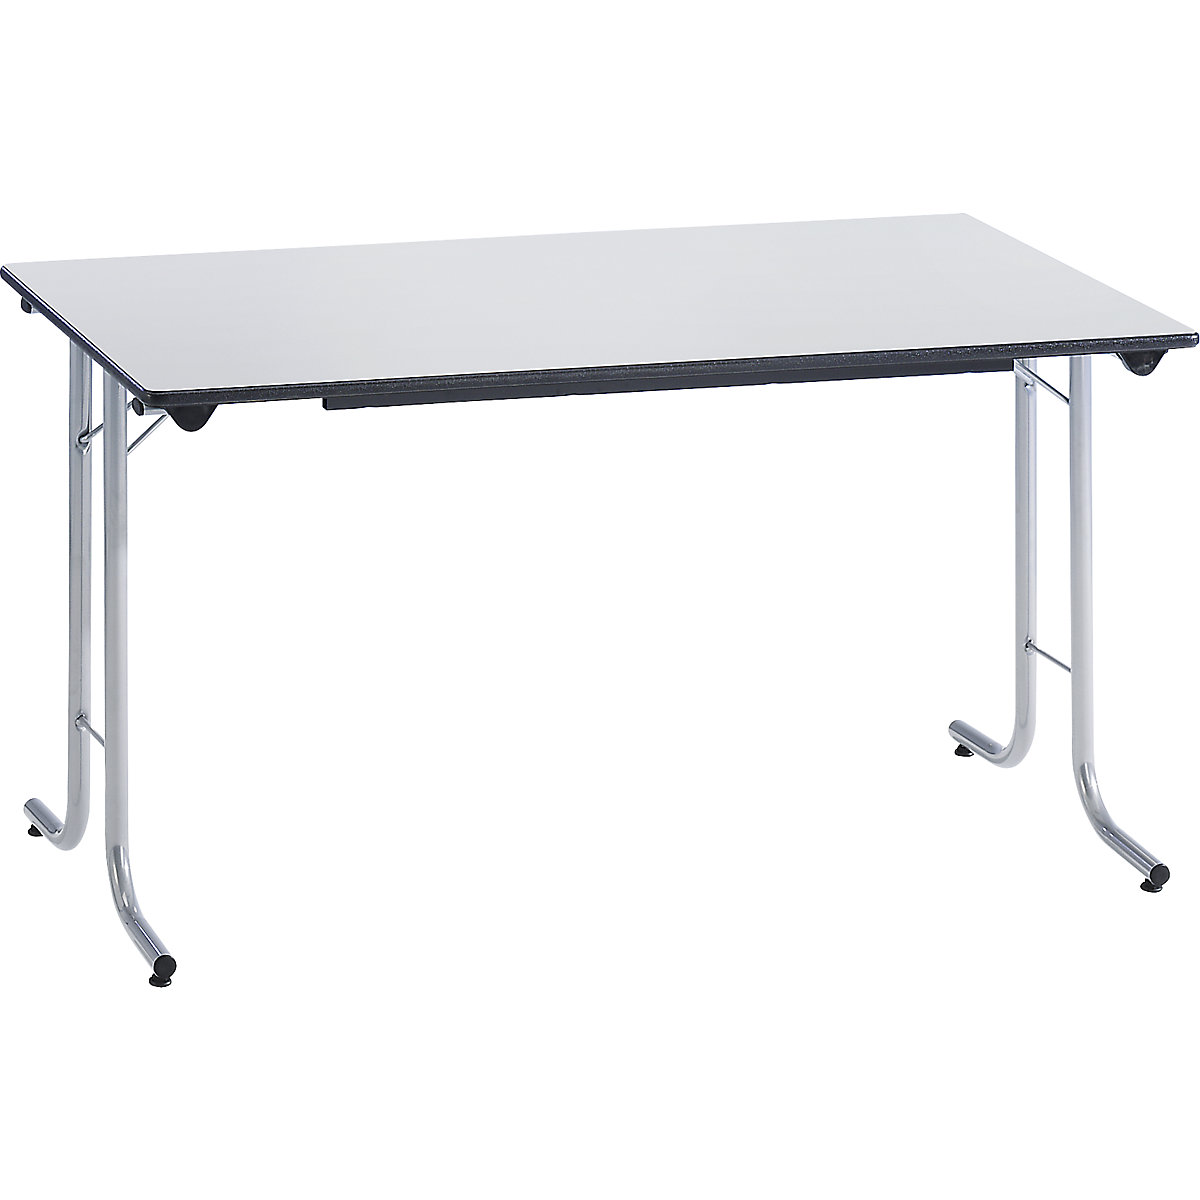 Folding table, with rounded edges, round tubular frame, rectangular top, 1200 x 700 mm, aluminium coloured frame, light grey tabletop-1